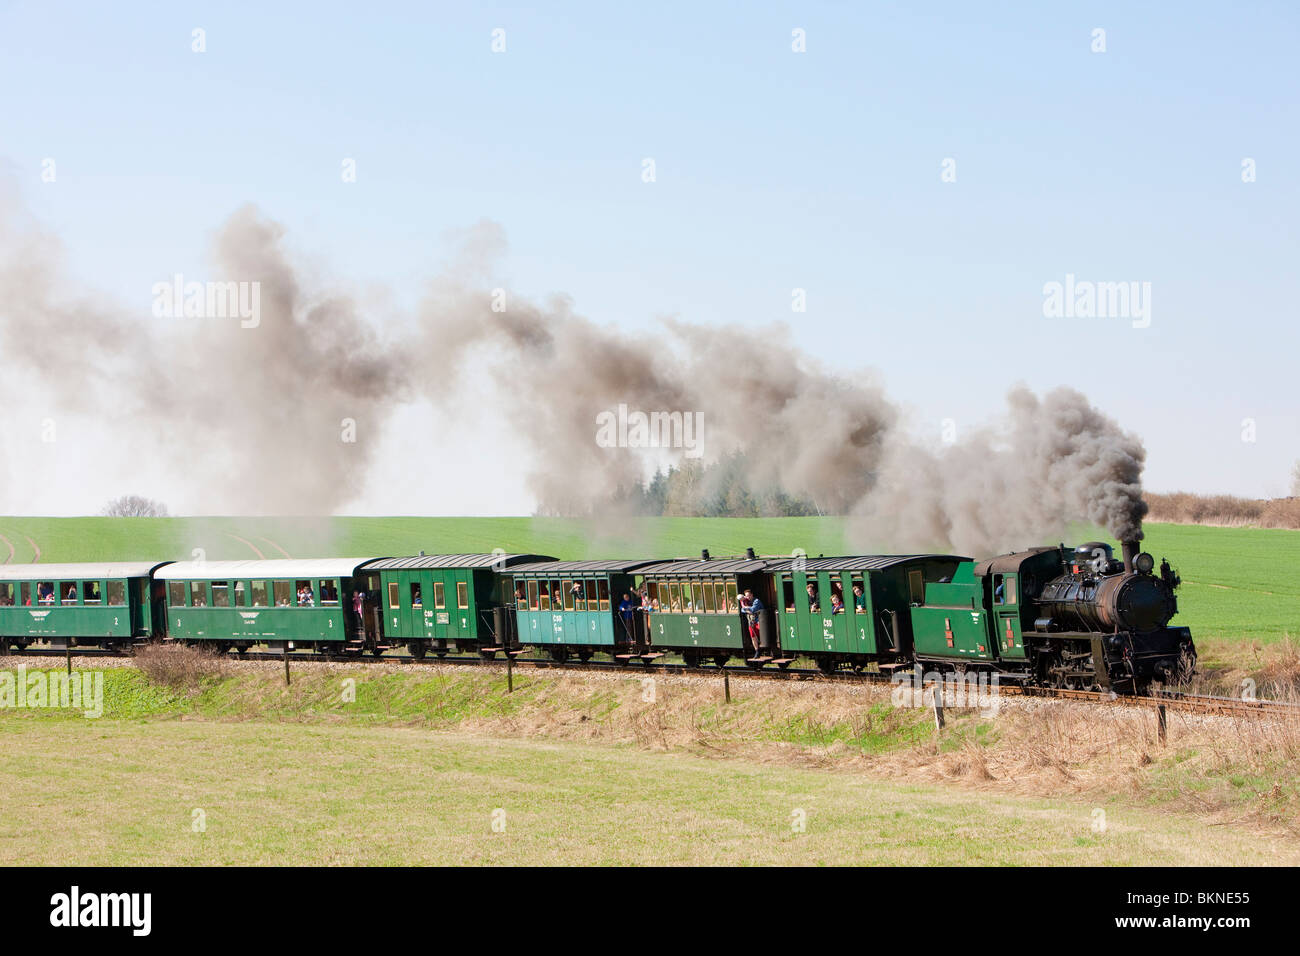 steam train, Jindrichuv Hradec - Obratan, Czech Republic Stock Photo